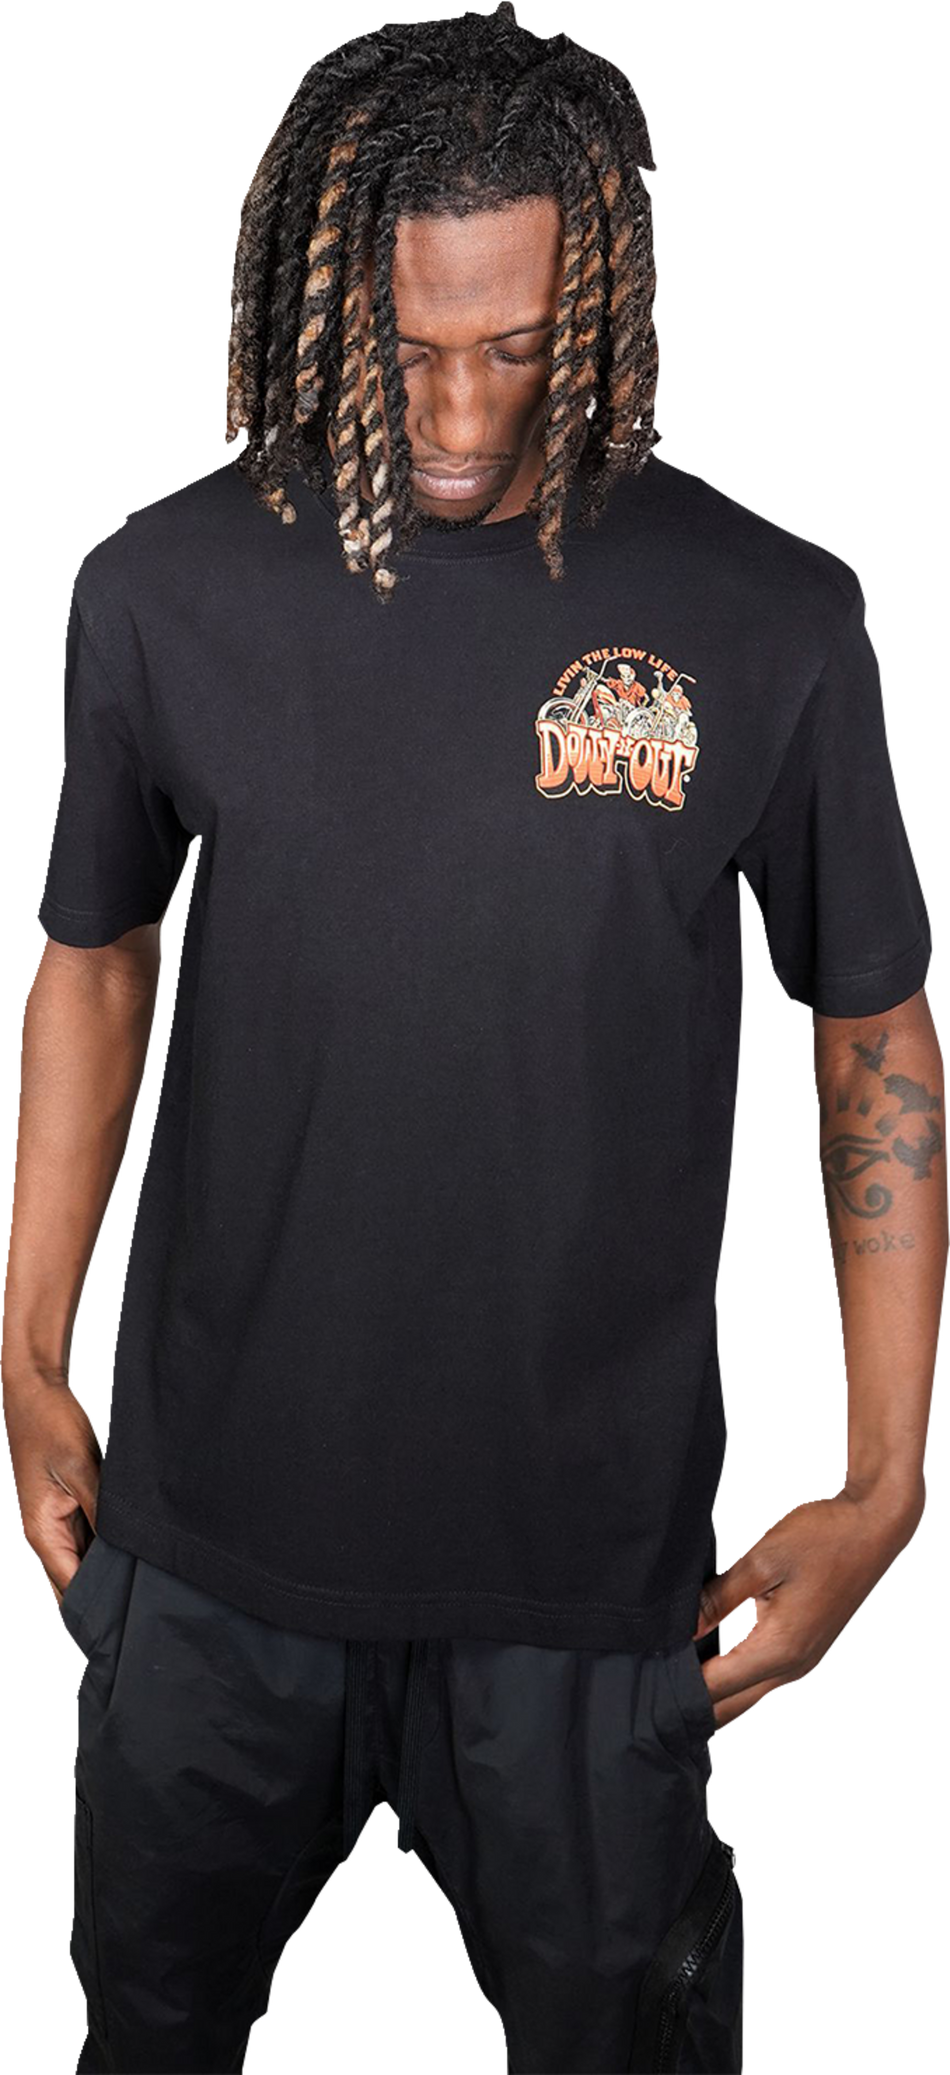 LETHAL THREAT Down-N-Out 4 Life T-Shirt - Black - XL DT10044XL